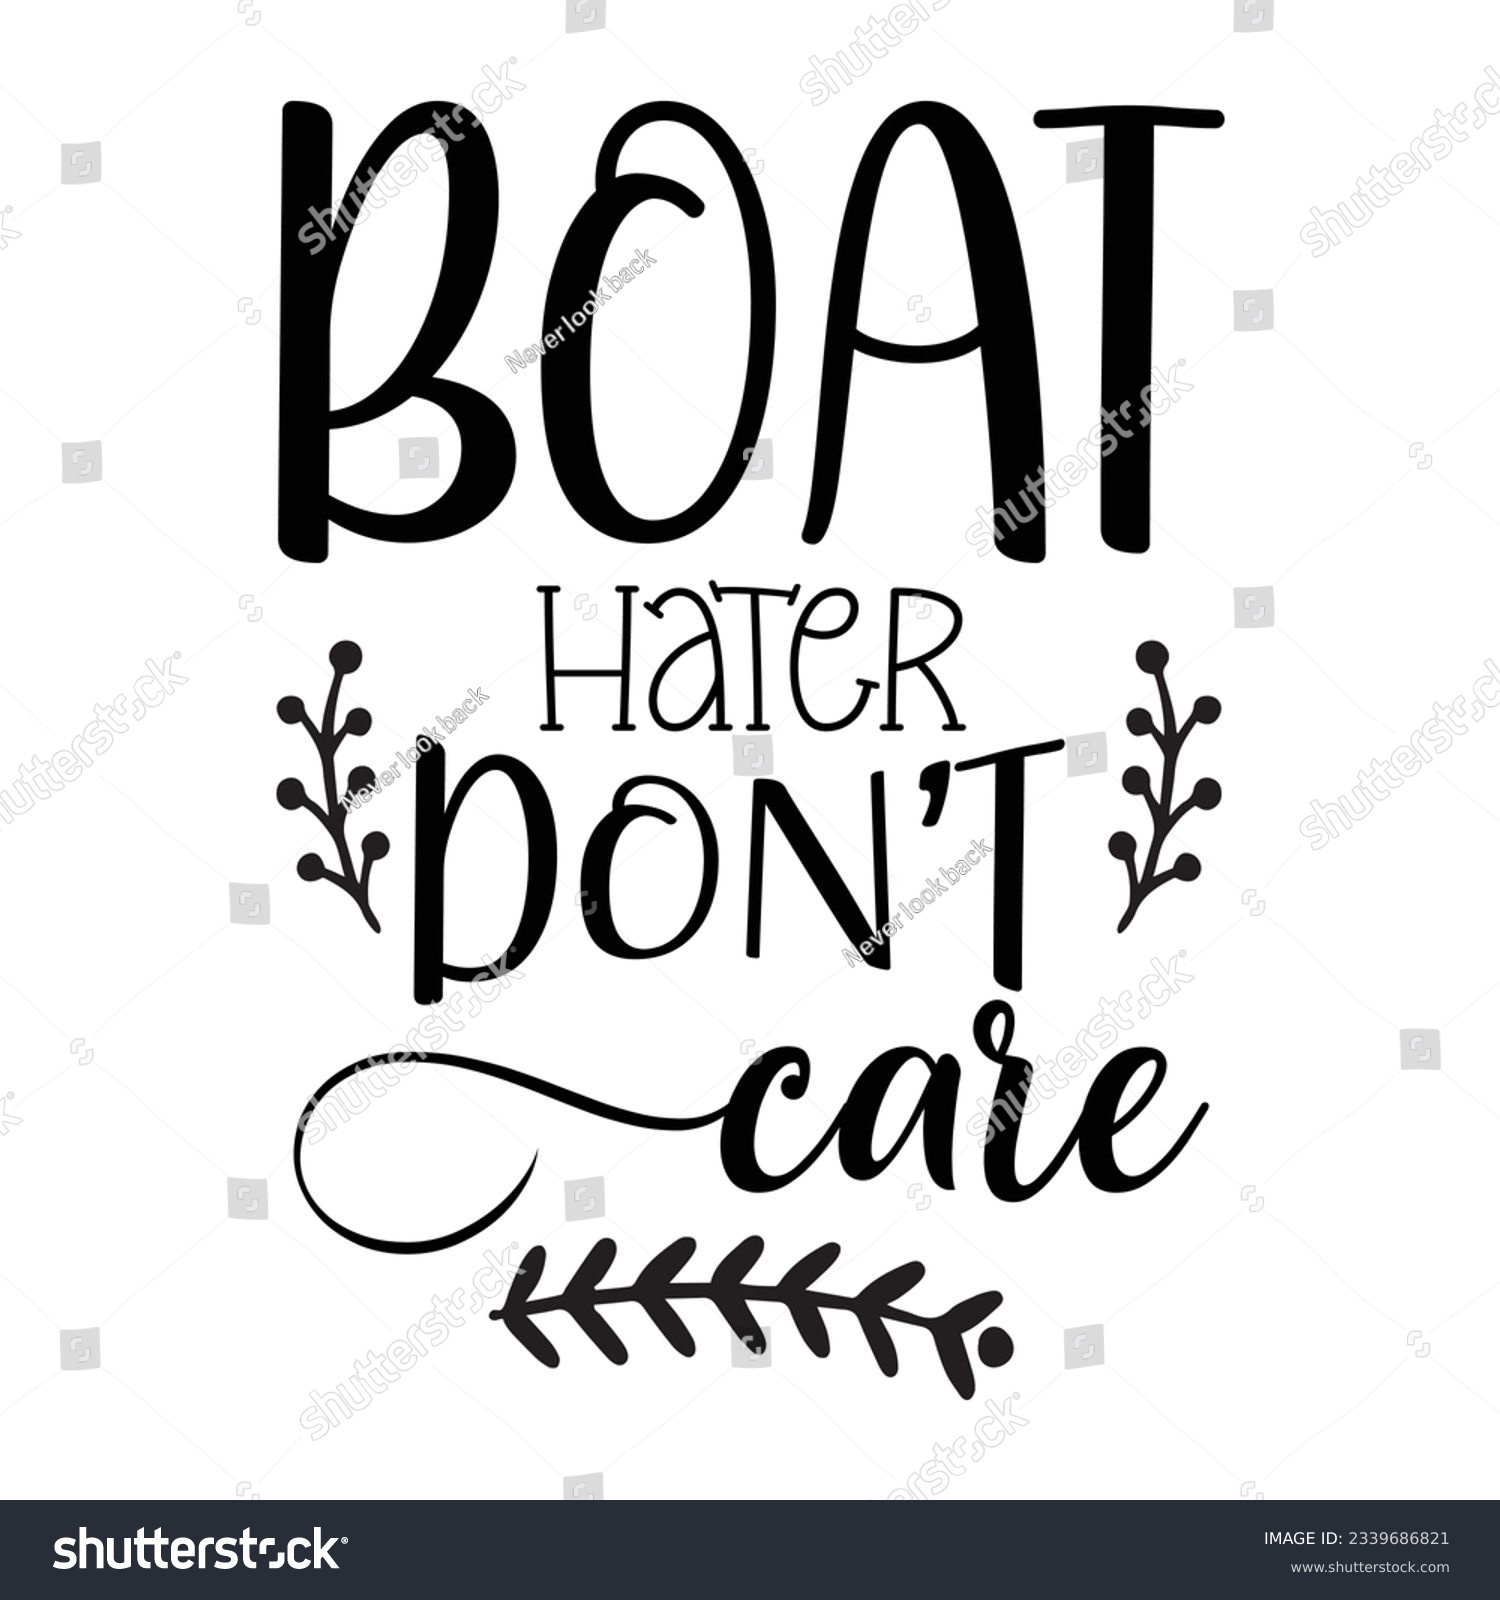 SVG of 

boat hater don't care SVG t-shirt design, summer SVG, summer quotes , waves SVG, beach, summer time  SVG, Hand drawn vintage illustration with lettering and decoration elements svg